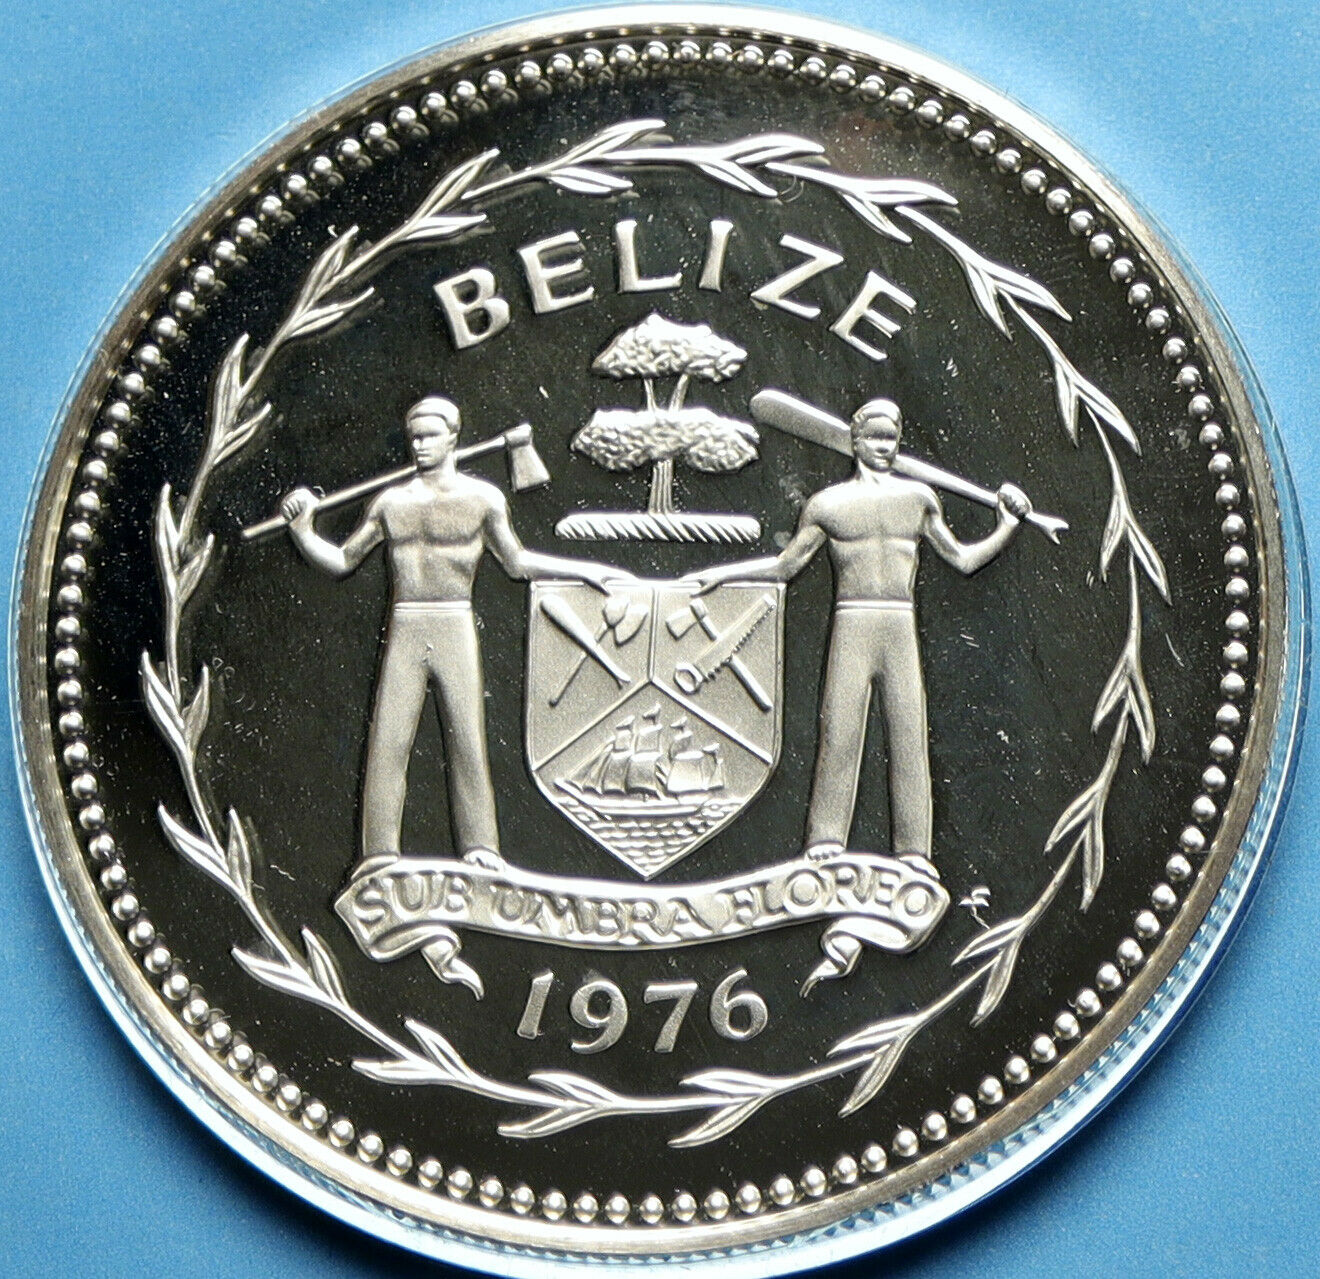 1976 BELIZE Avifauna Toucan BIRD Antique VINTAGE Proof Silver $5 Coin i104056